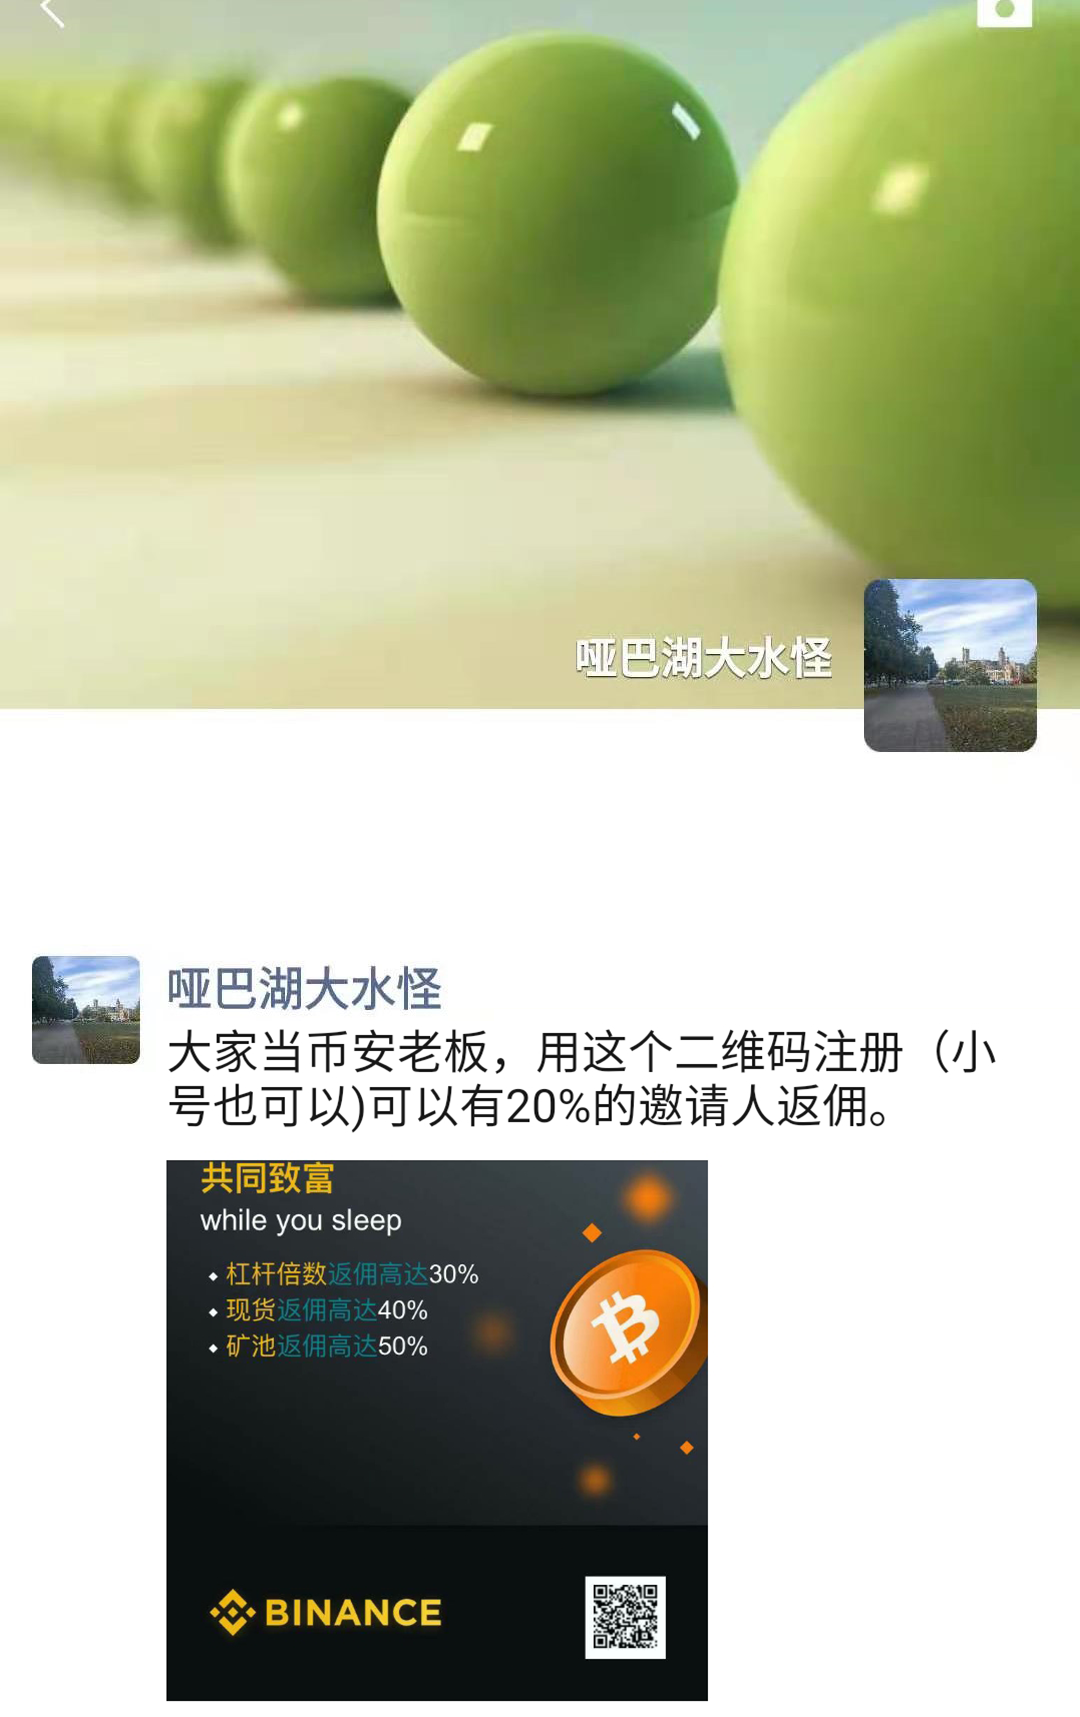 WeChat Image_2021033019329875.png